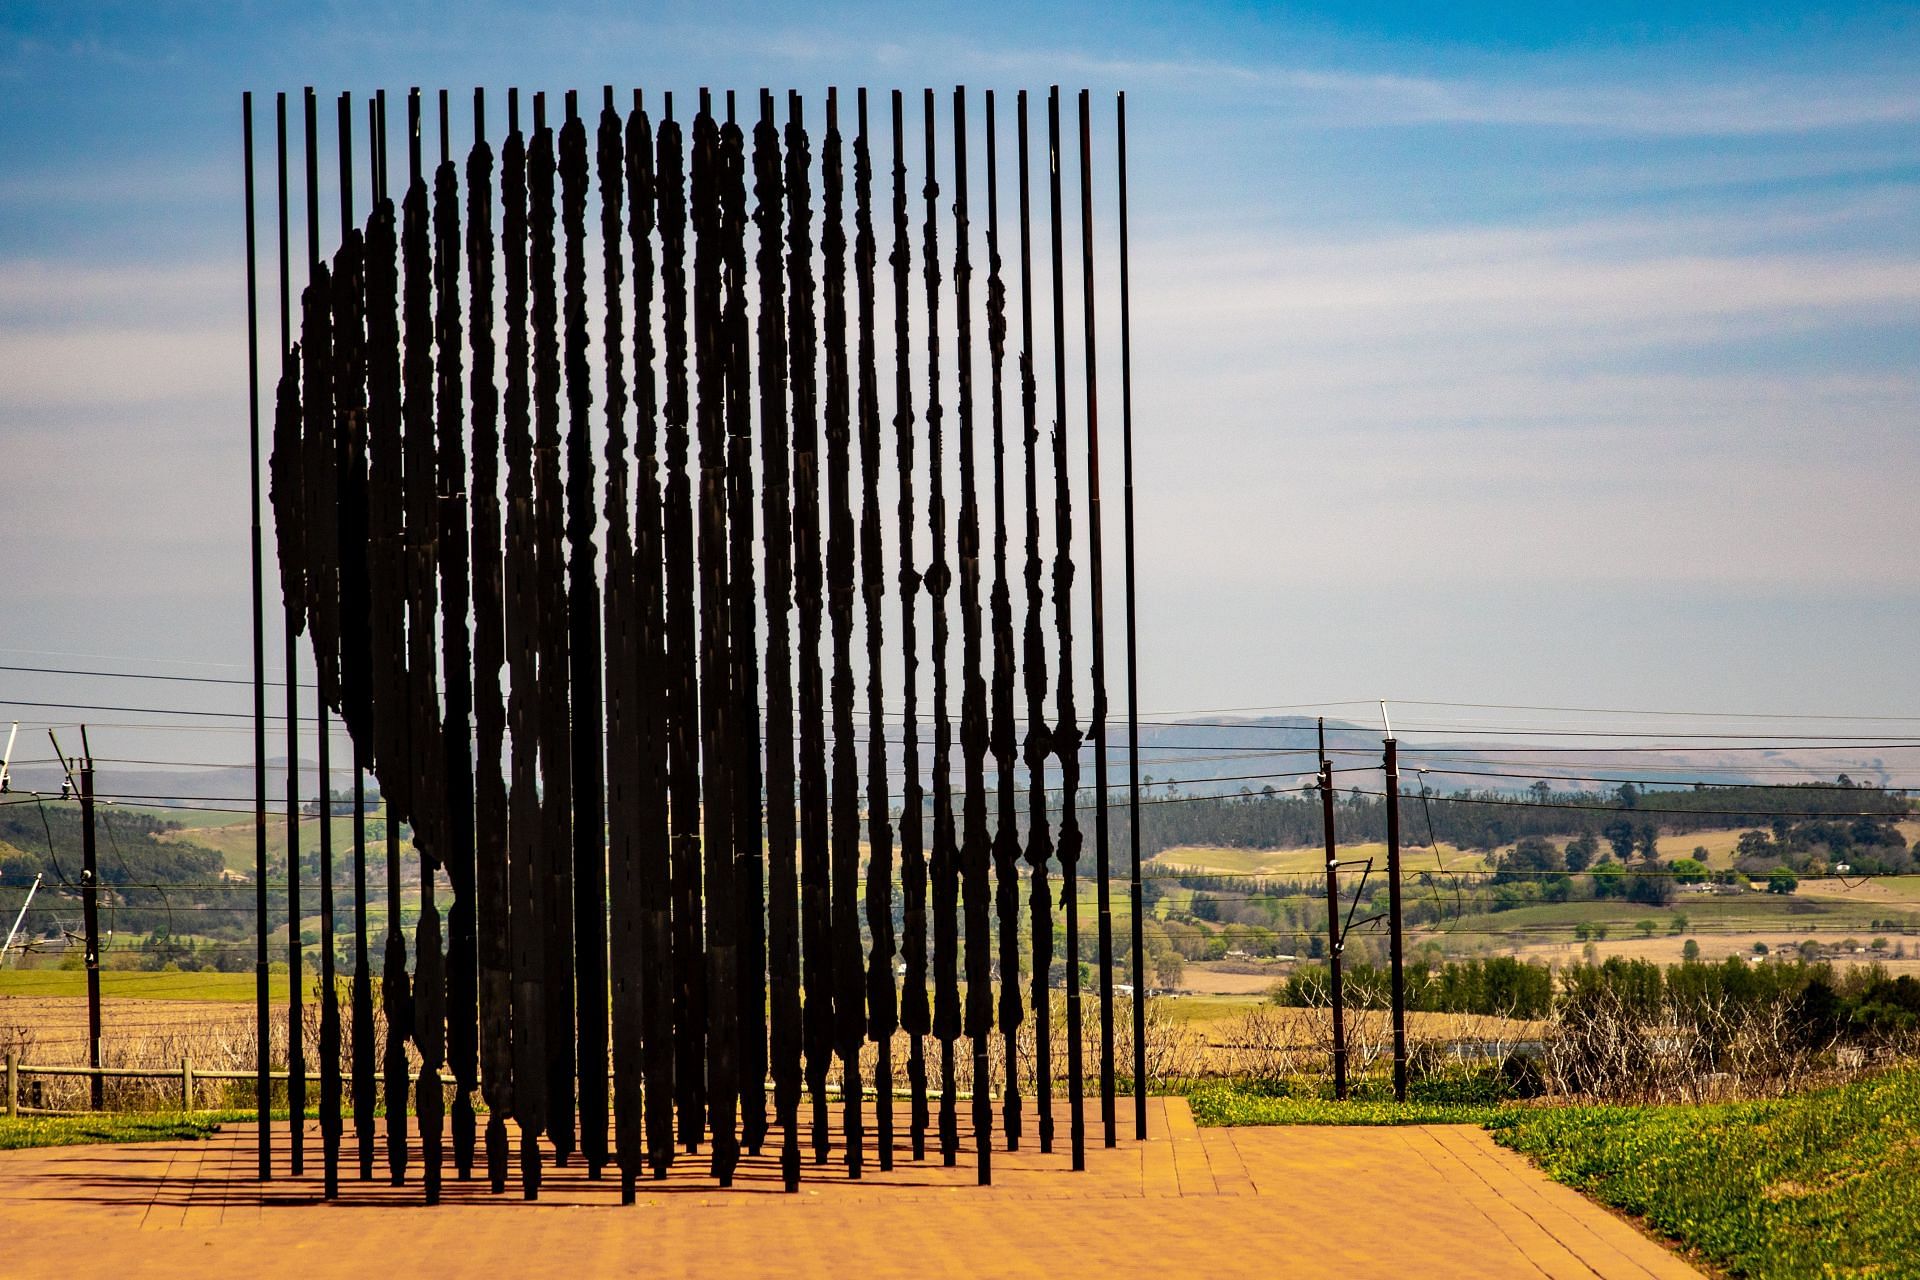 The Mandela effect comes from a false memory of Nelson Mandela. (Image via Pexels/ Magda Ehlers)